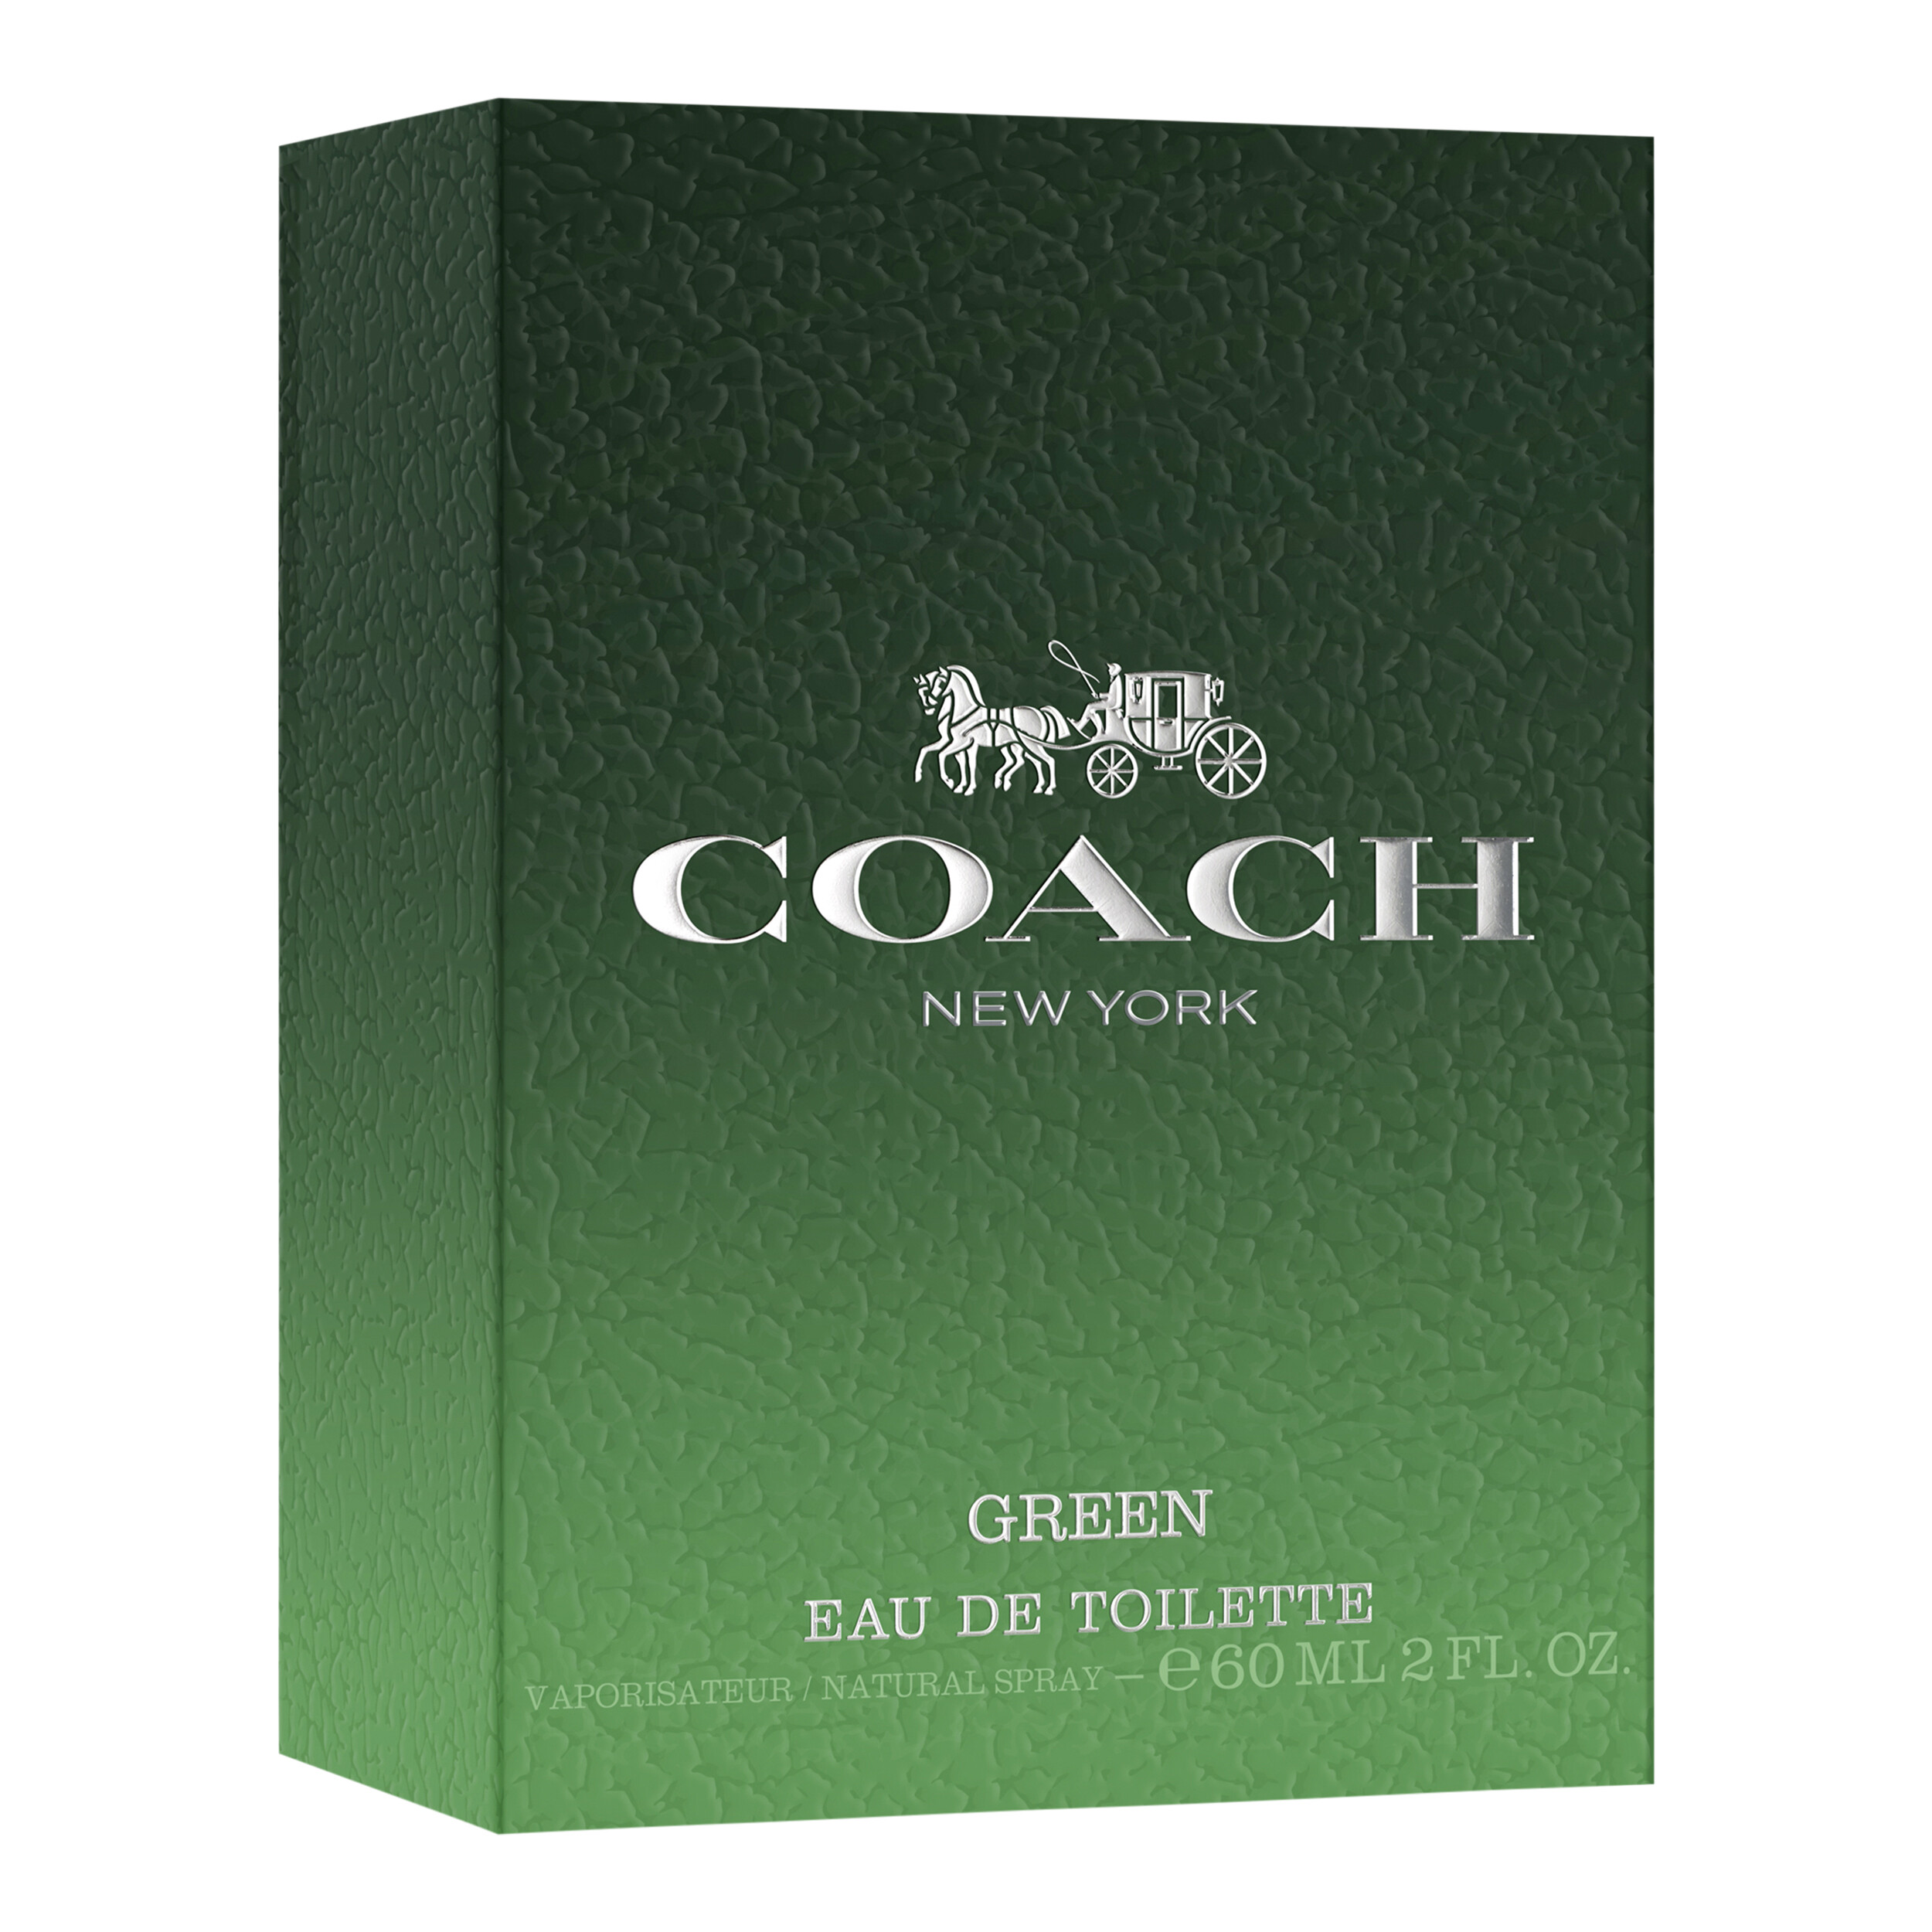 Coach Green EDT 60ml